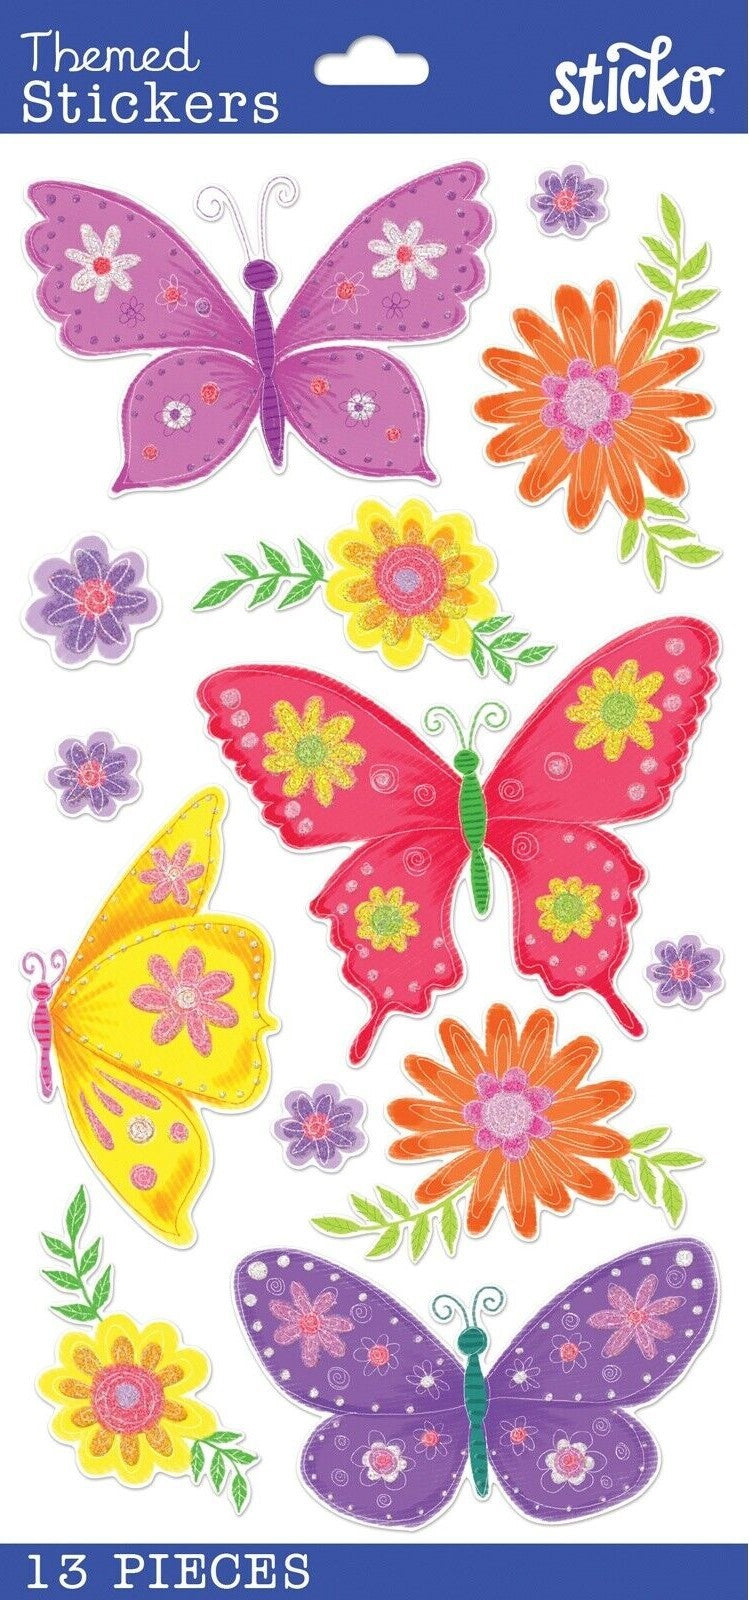 Sticko Paper Butterflies Stickers